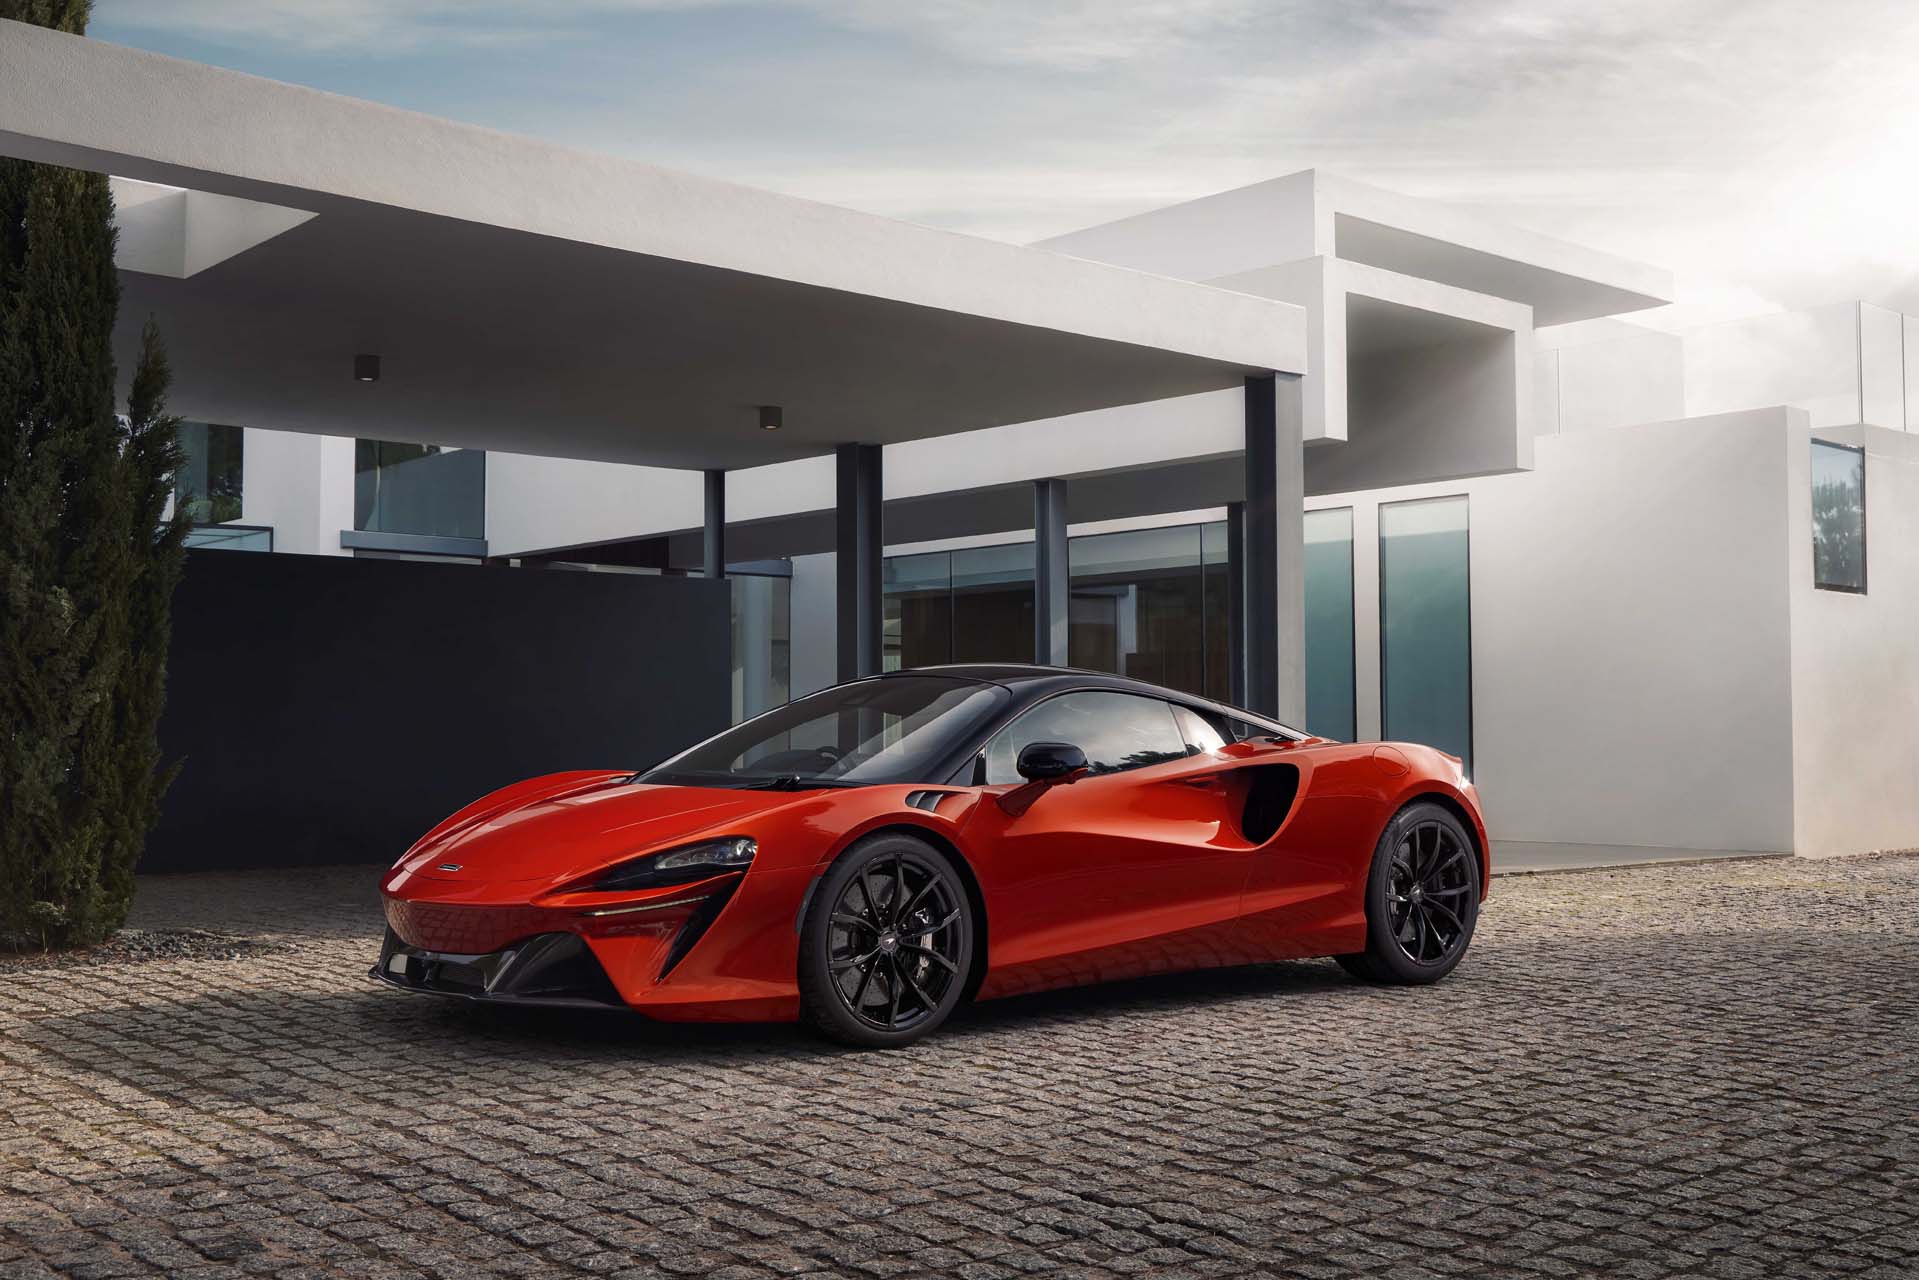 2022 McLaren Artura, 2022 GMC Hummer EV, Aston Martin Valkyrie: This Week’s Prime Pictures Auto Recent